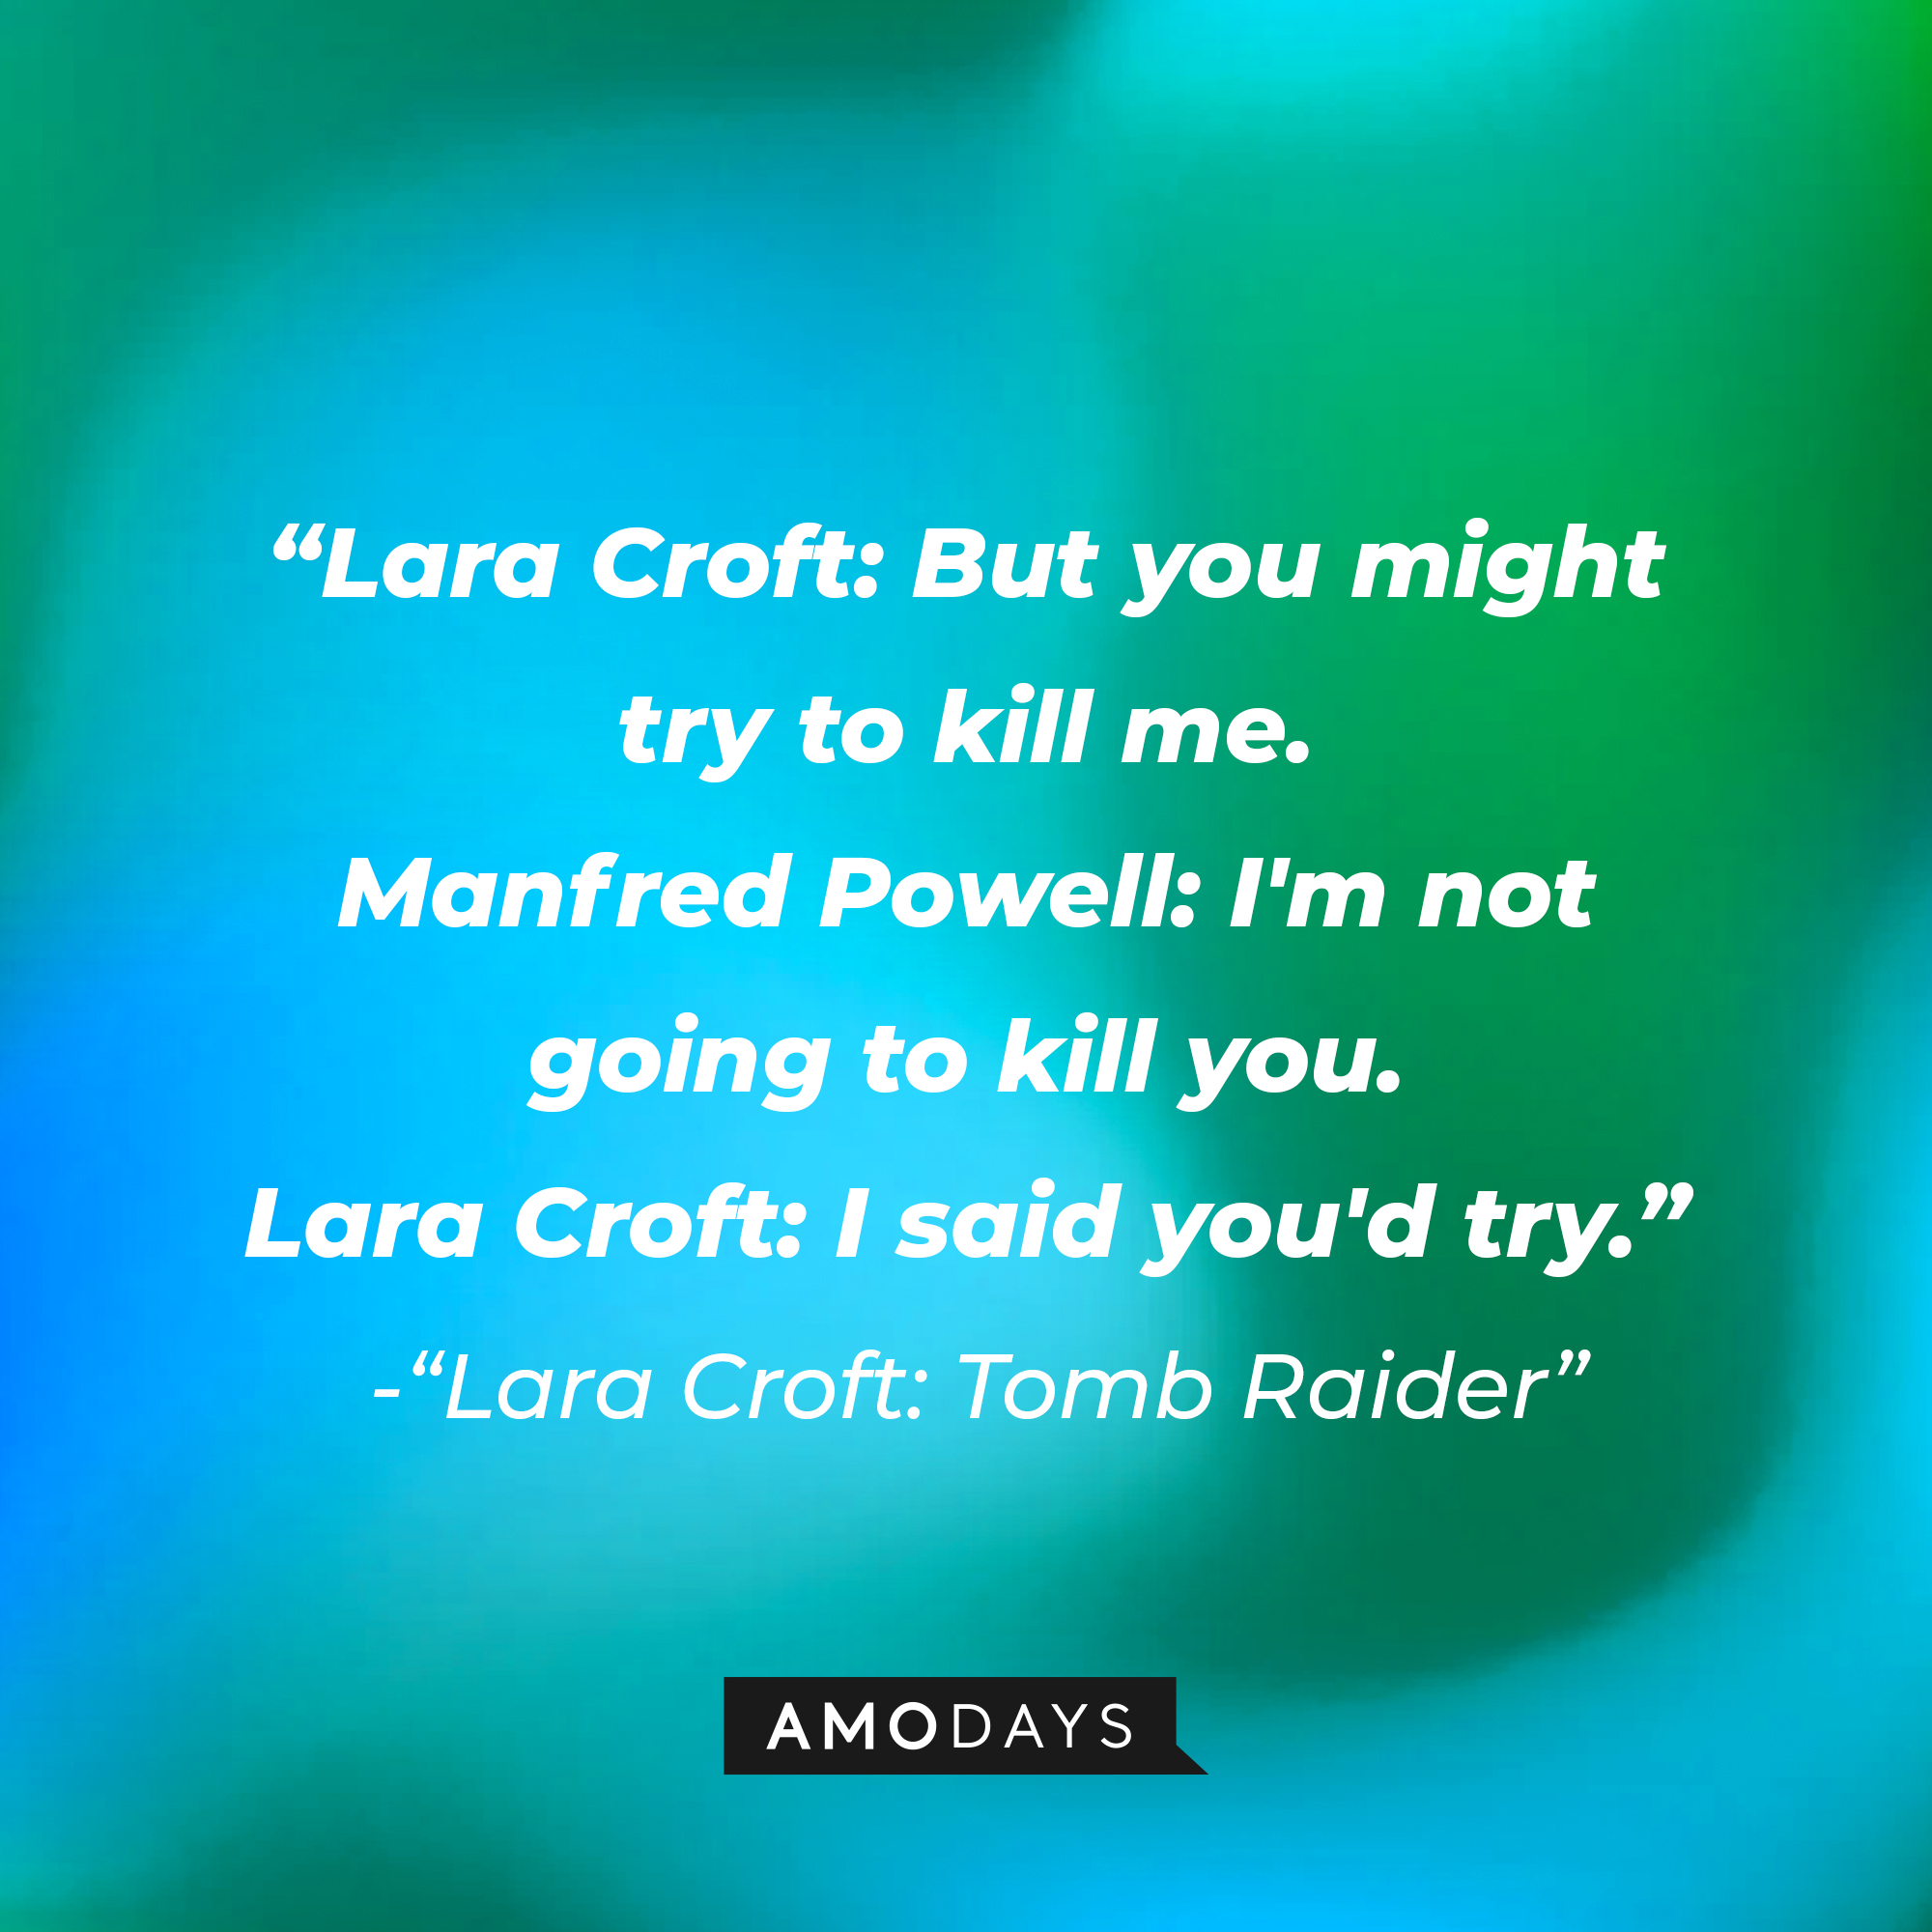 Lara Croft's "Lara Croft: Tomb Raider" quote: "Lara Croft: But you might try to kill me. / Manfred Powell: I'm not going to kill you. / Lara Croft: I said you'd try." | Source: AmoDays